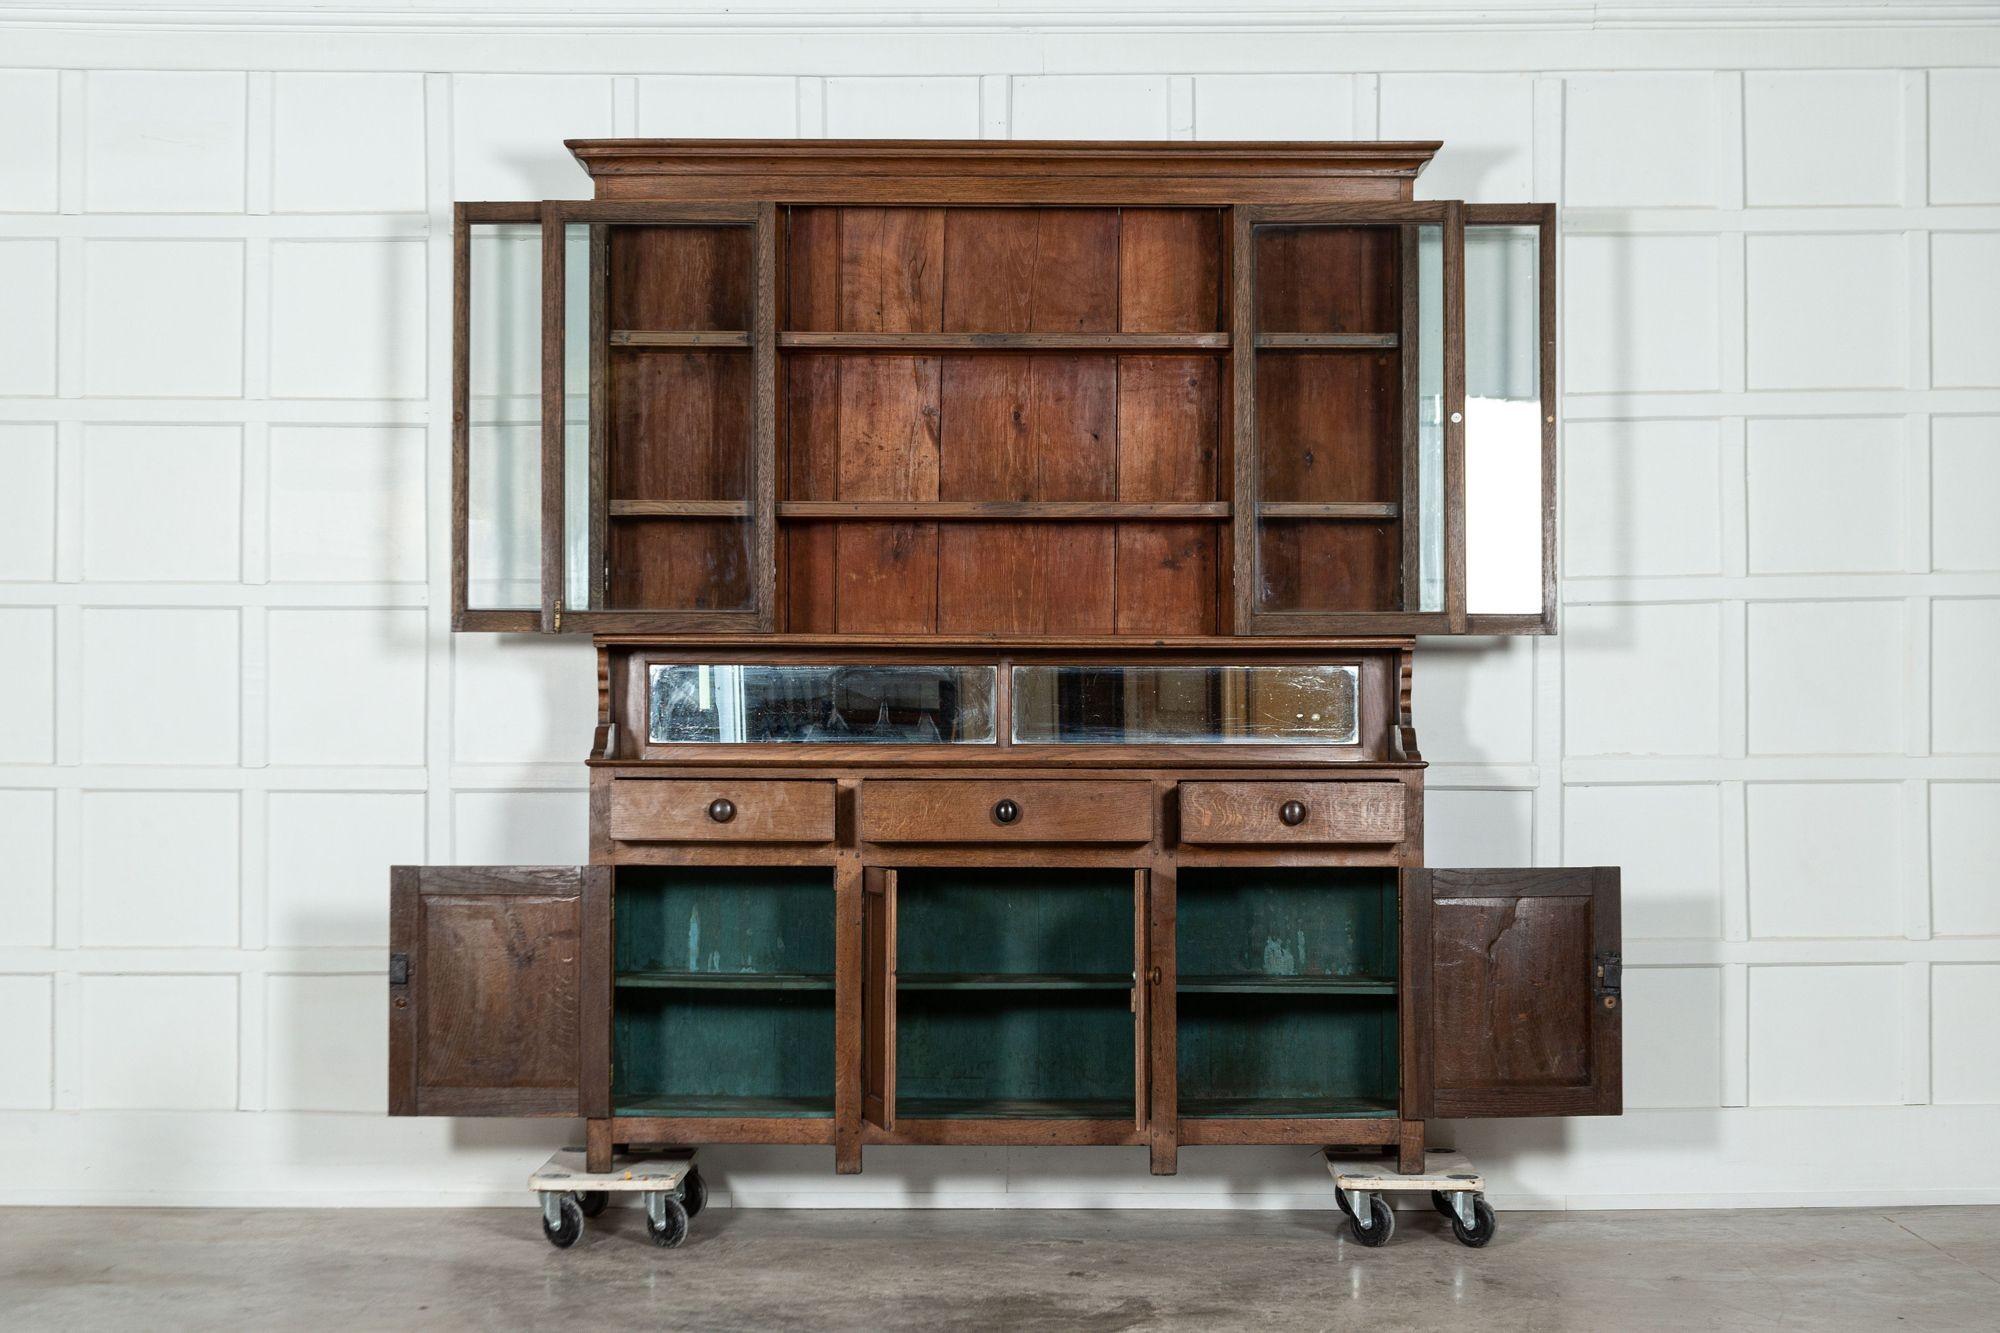 circa 1880
Large English Oak Glazed Butlers Pantry Cabinet
sku 1529
Together W184 x D38 x H214 cm
Base W184 x D31 x H129 cm
Top W174 x D38 x H85 cm